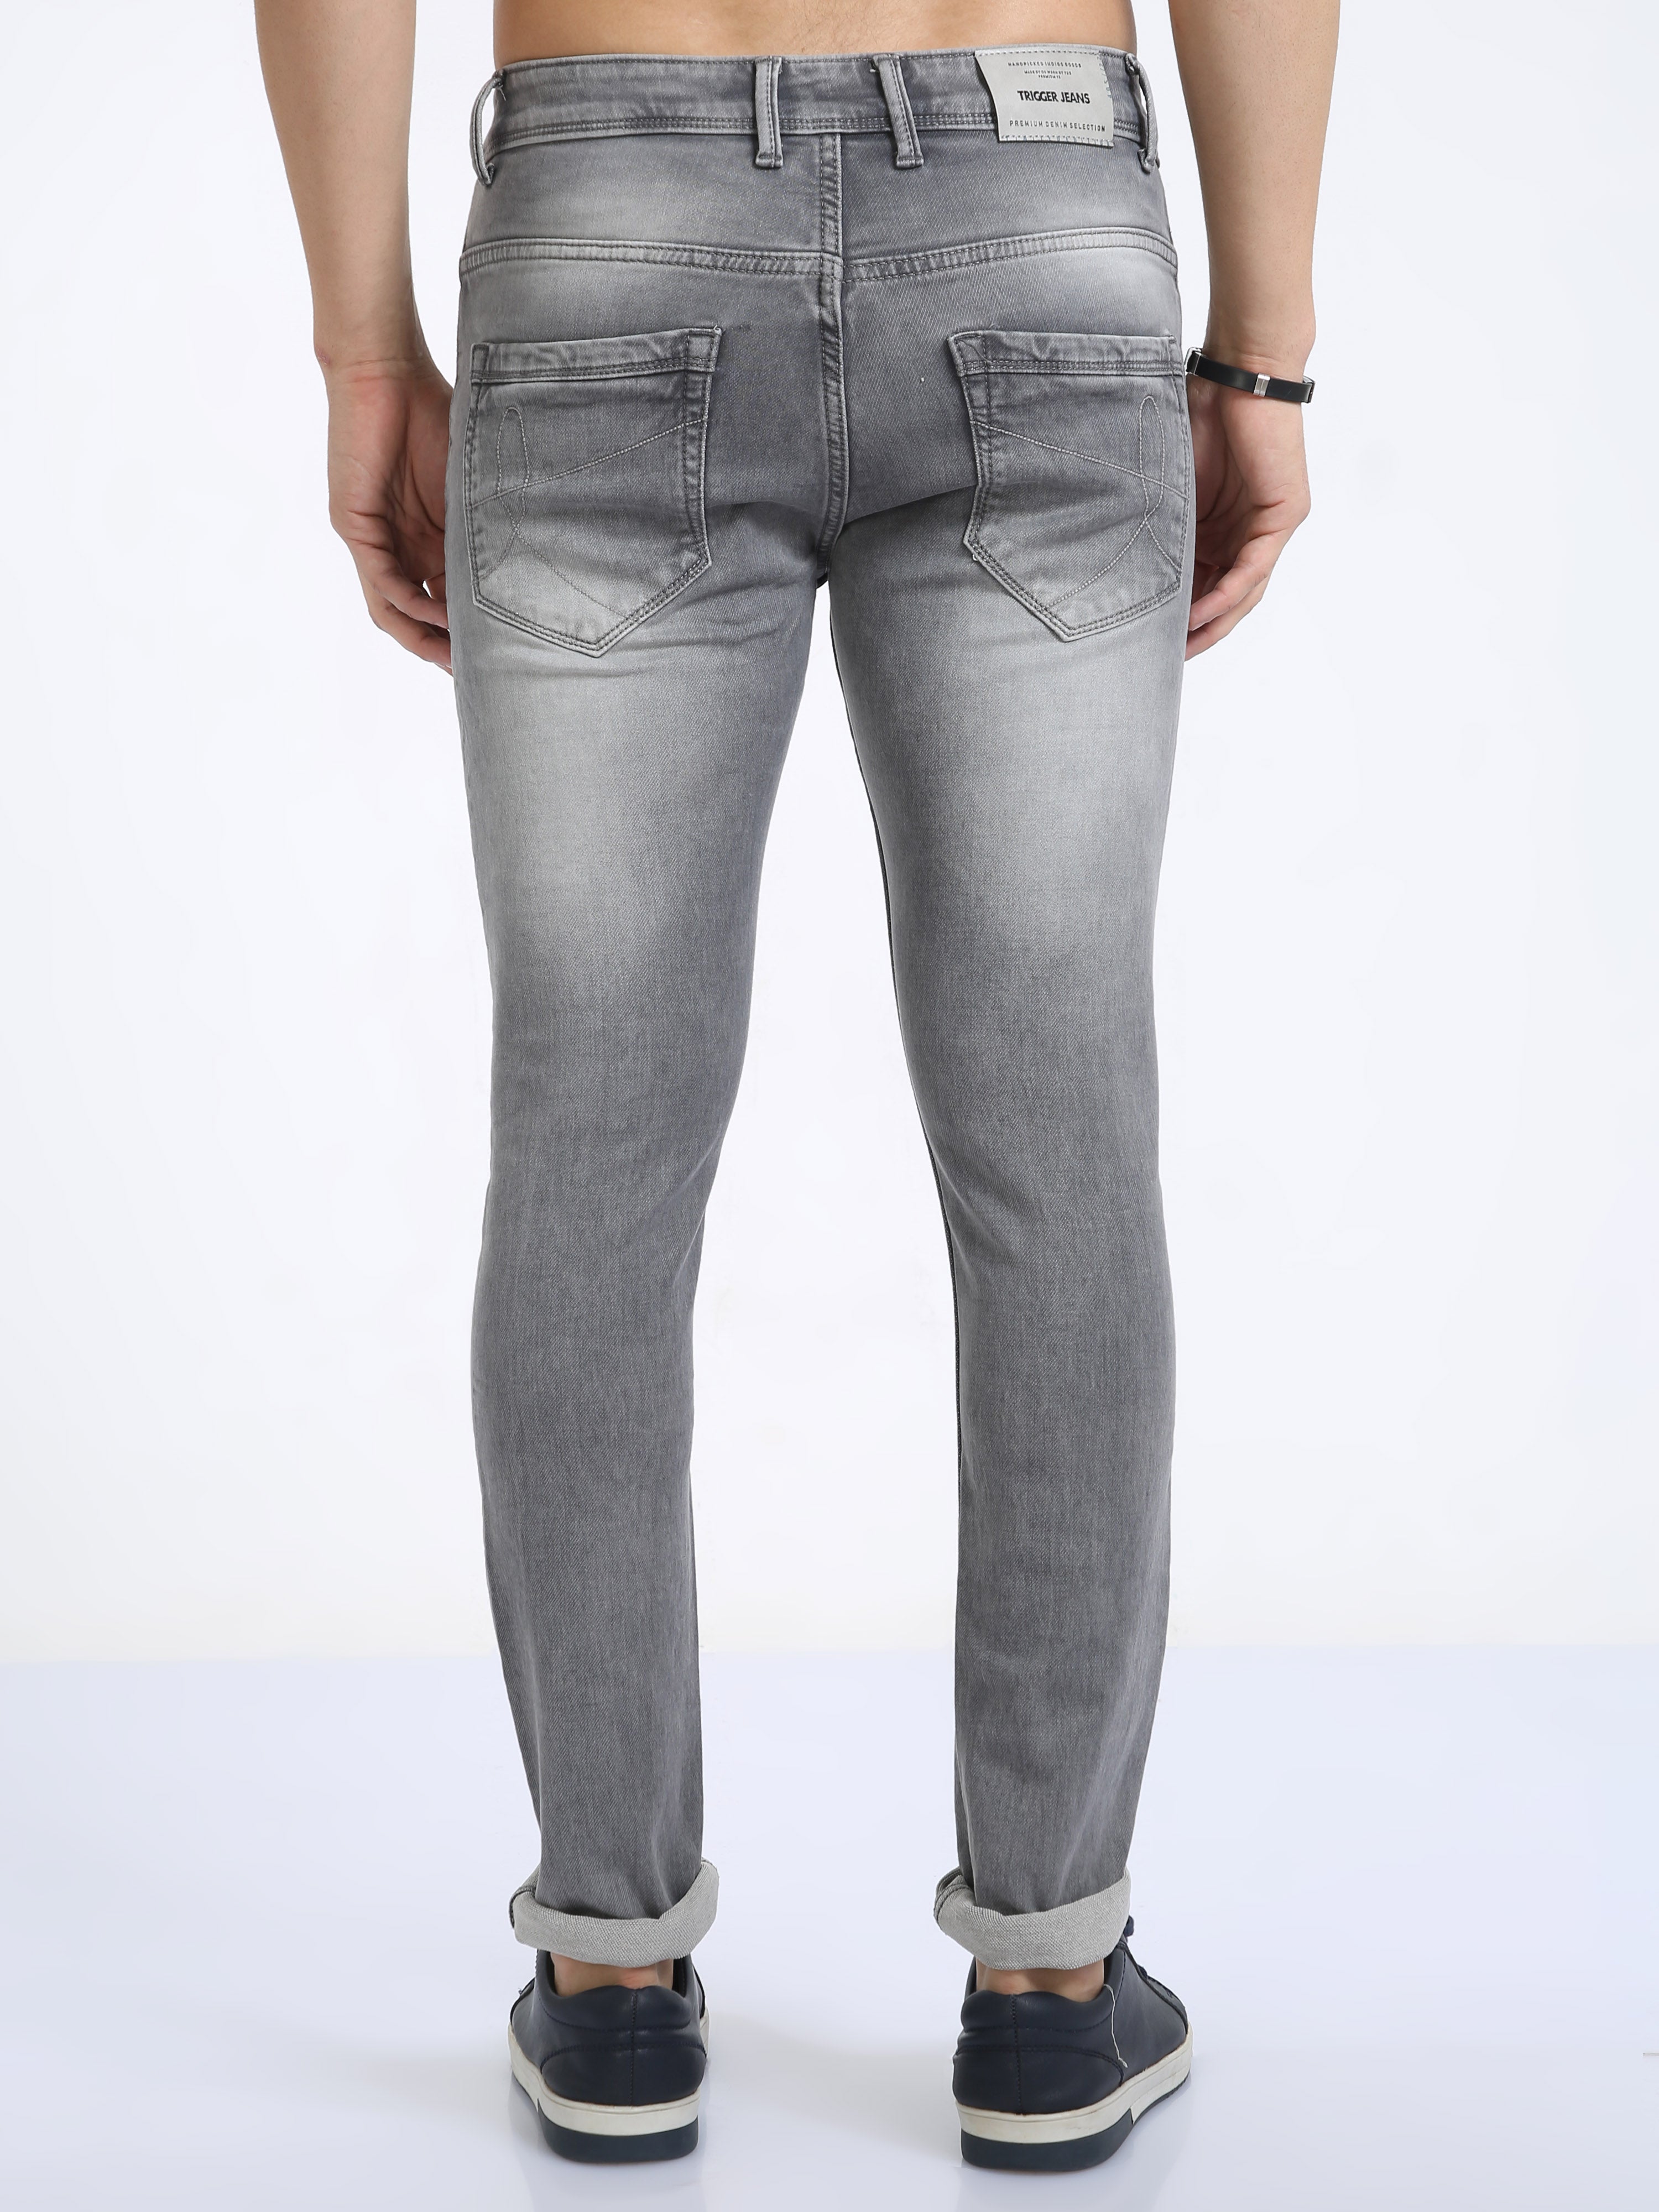 Pewter Grey Men Skinny-Fit Jeans